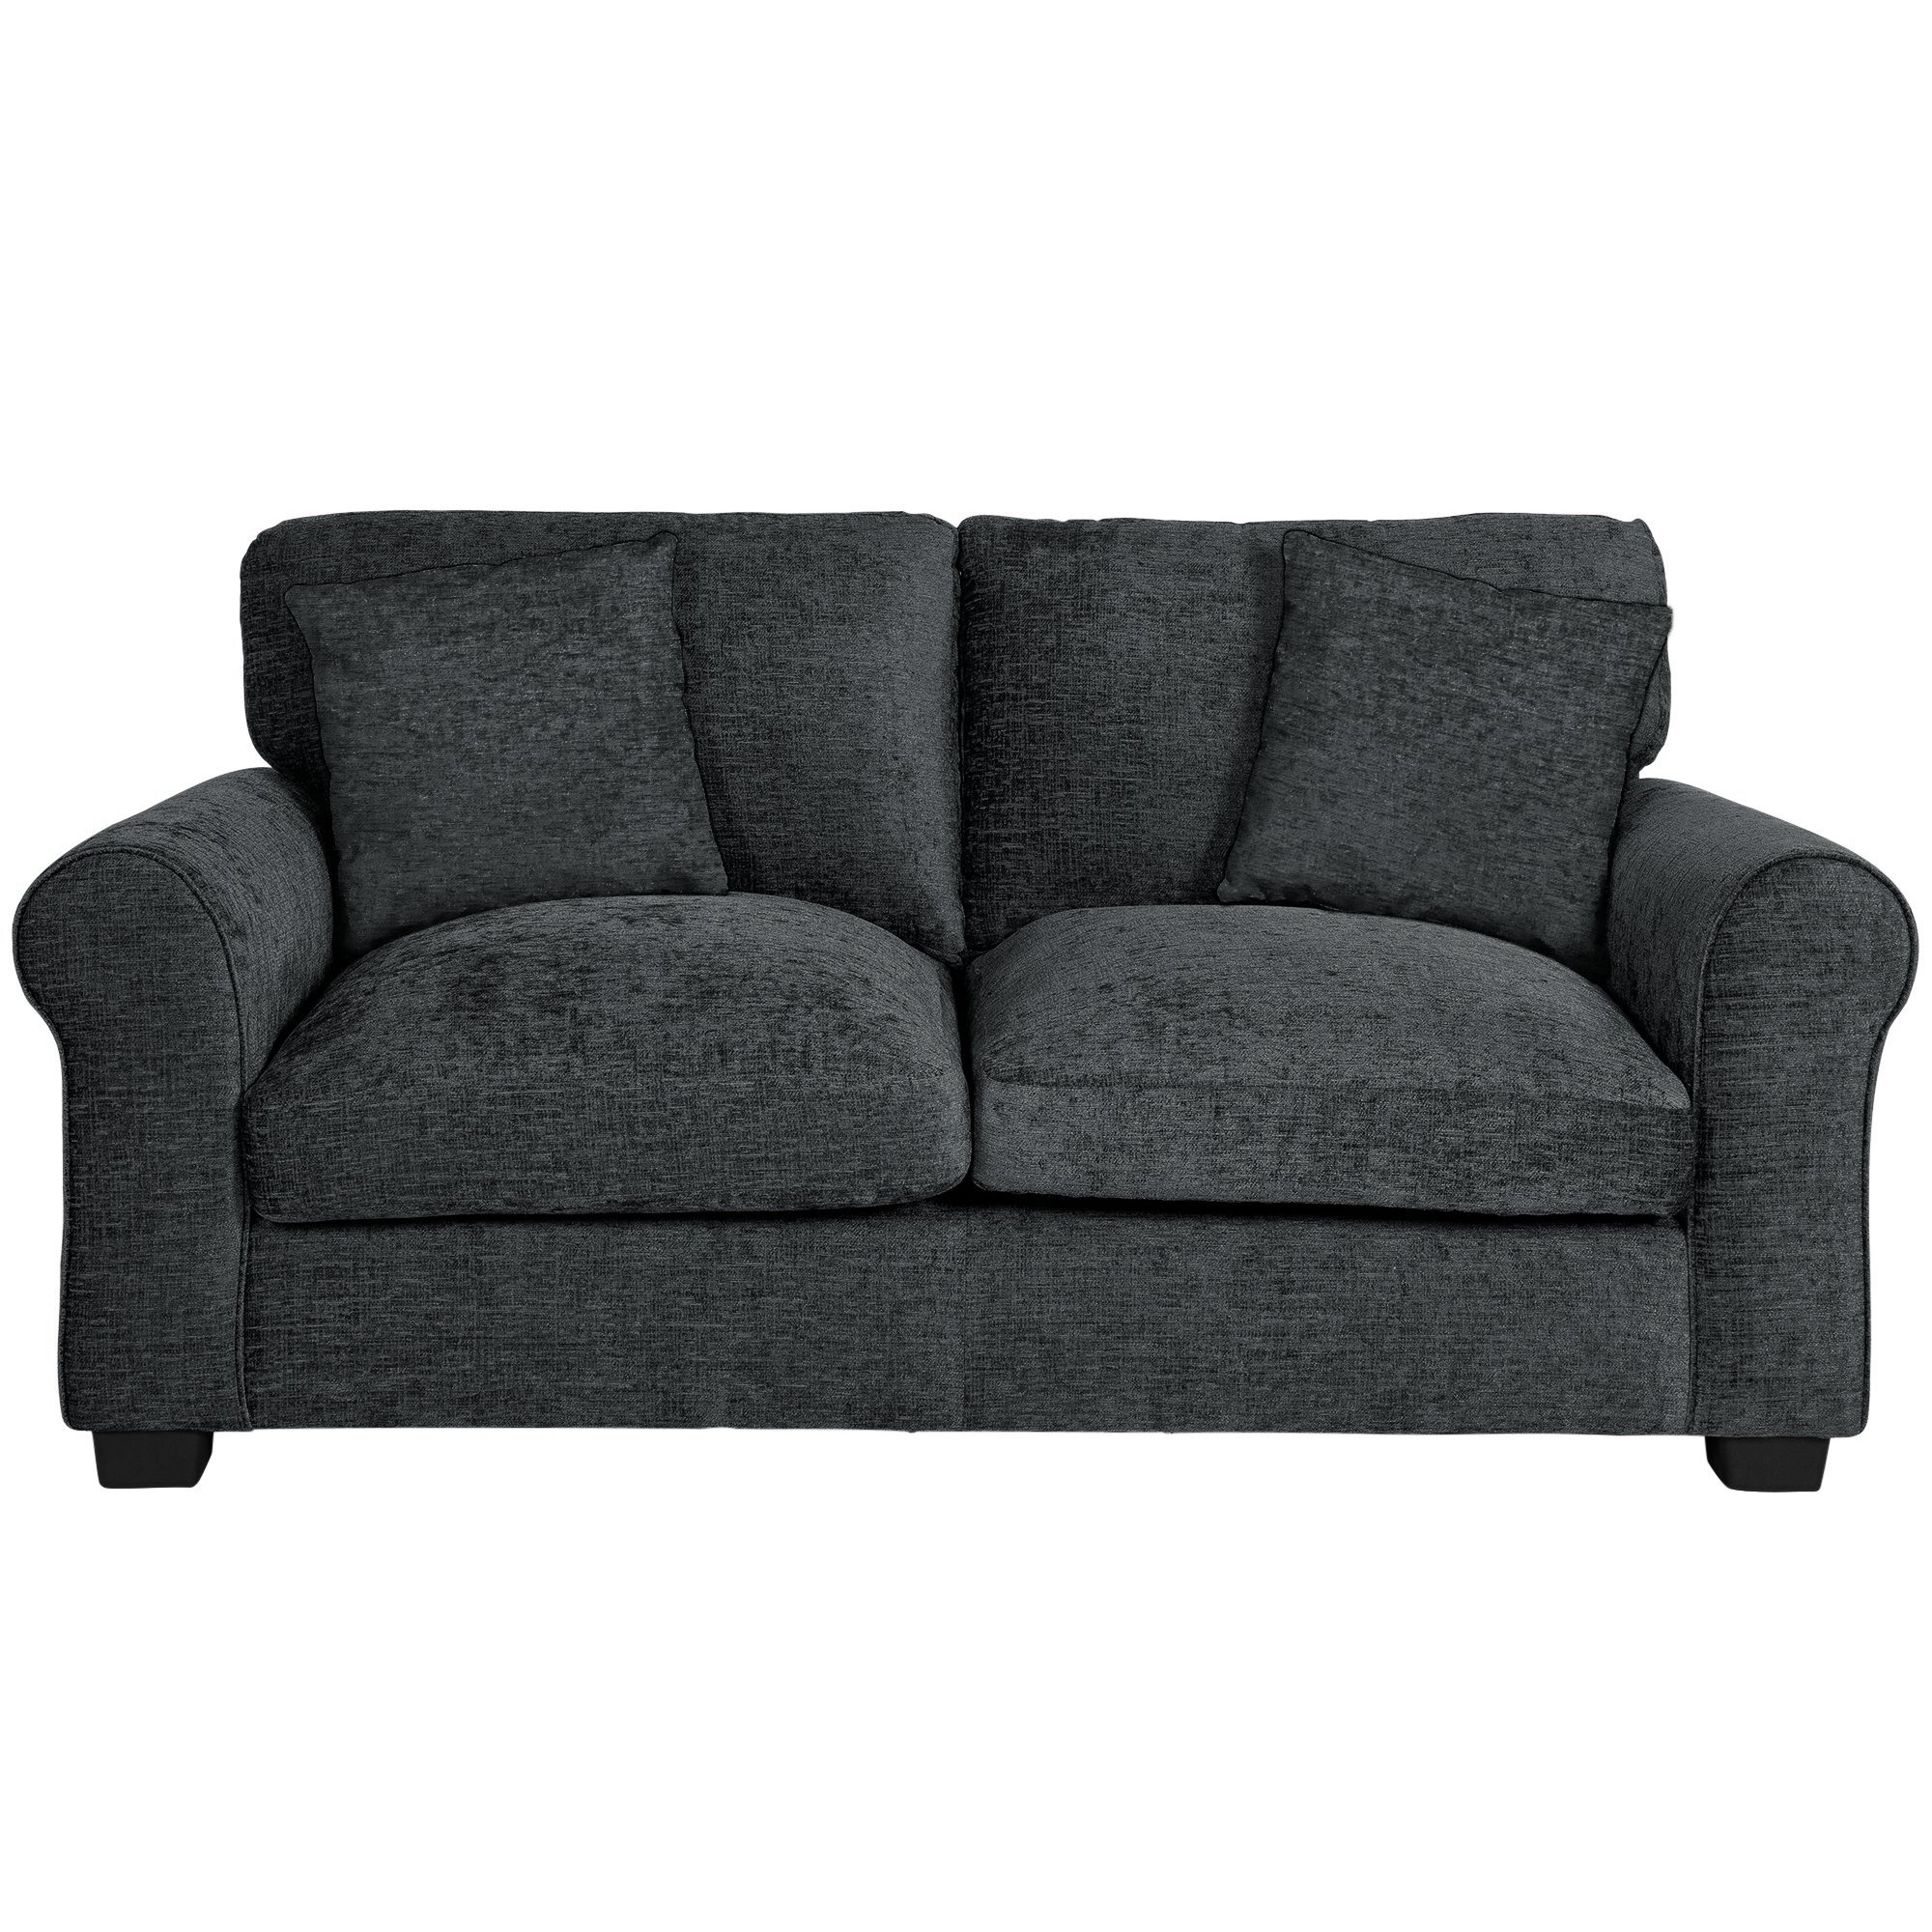 Argos Home Taylor Fabric 2 Seater Sofa - Grey - image 1